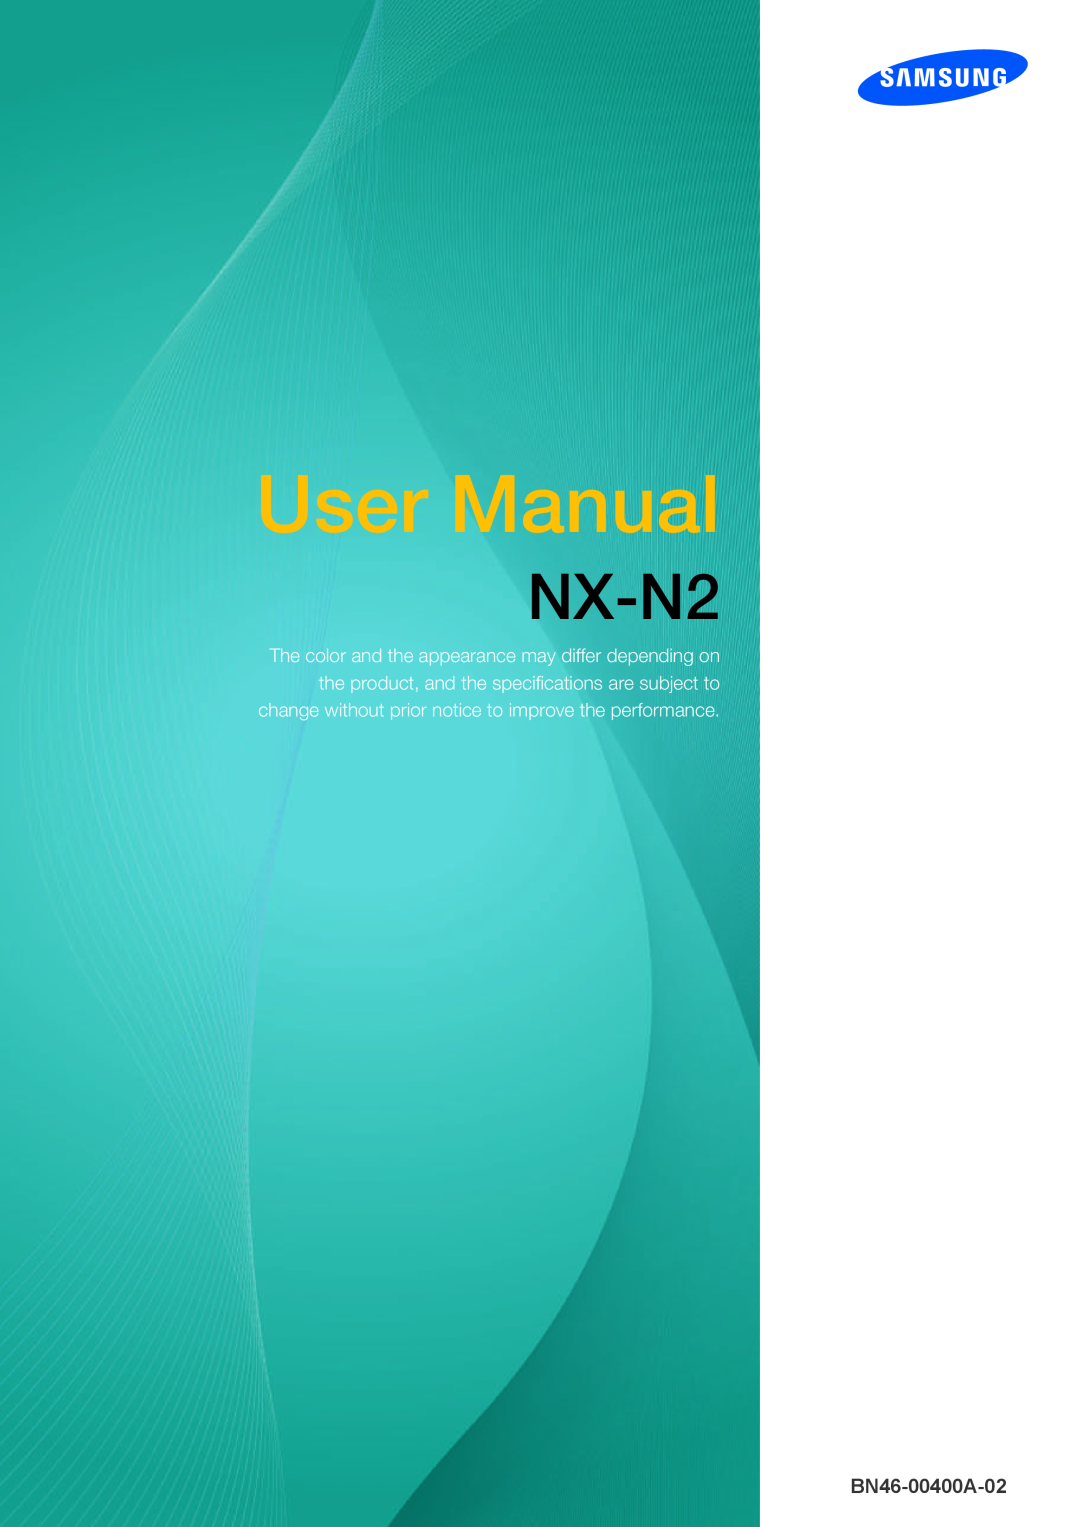 Samsung LF00FNXPFBZXEN, LF-NXN2N/EN, LF00FNXPFBZXXV, LF-NXN2N/XY, LF00FNXPFBZXCI manual User Manual, NX-N2, BN46-00400A-02 